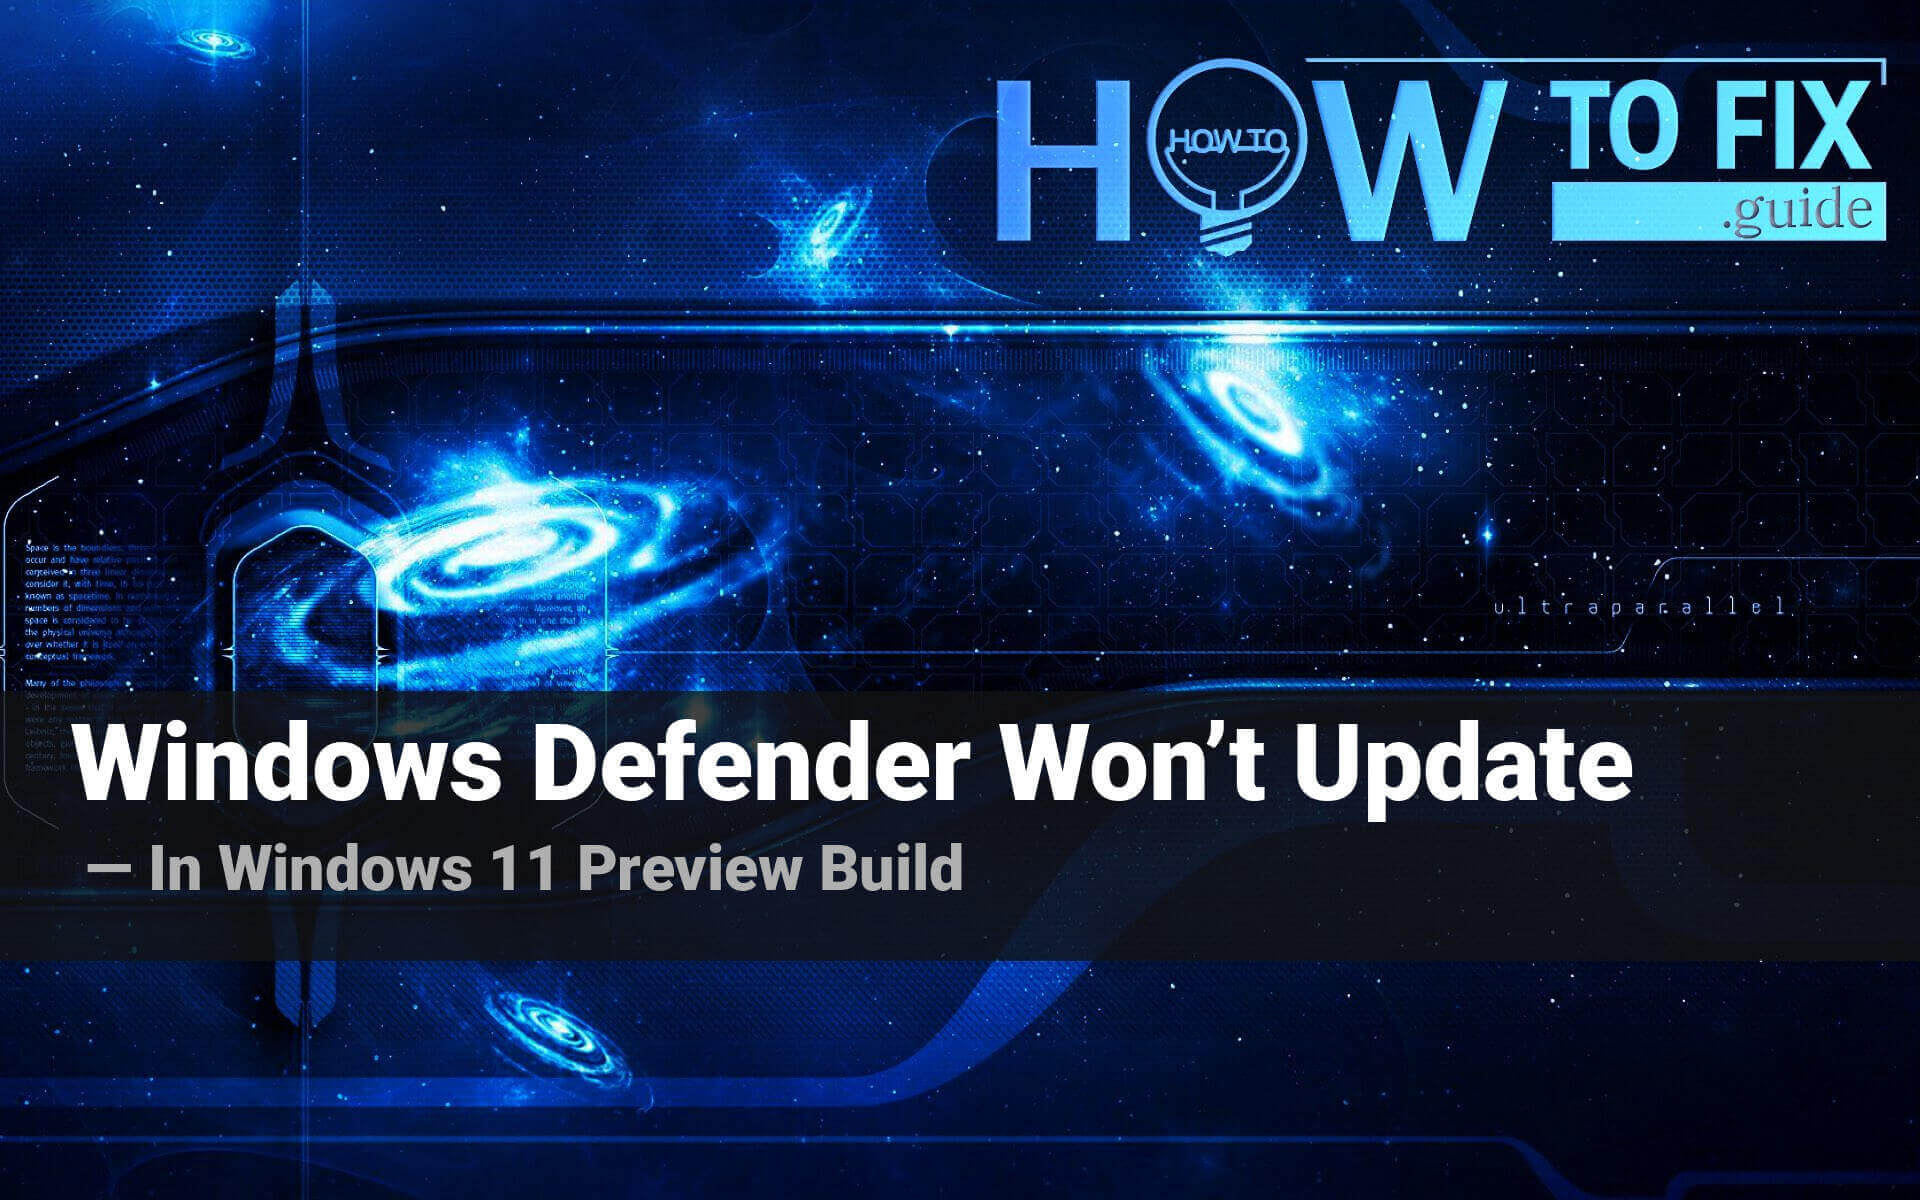 Windows Defender Won't Update in Windows 11 Preview Build